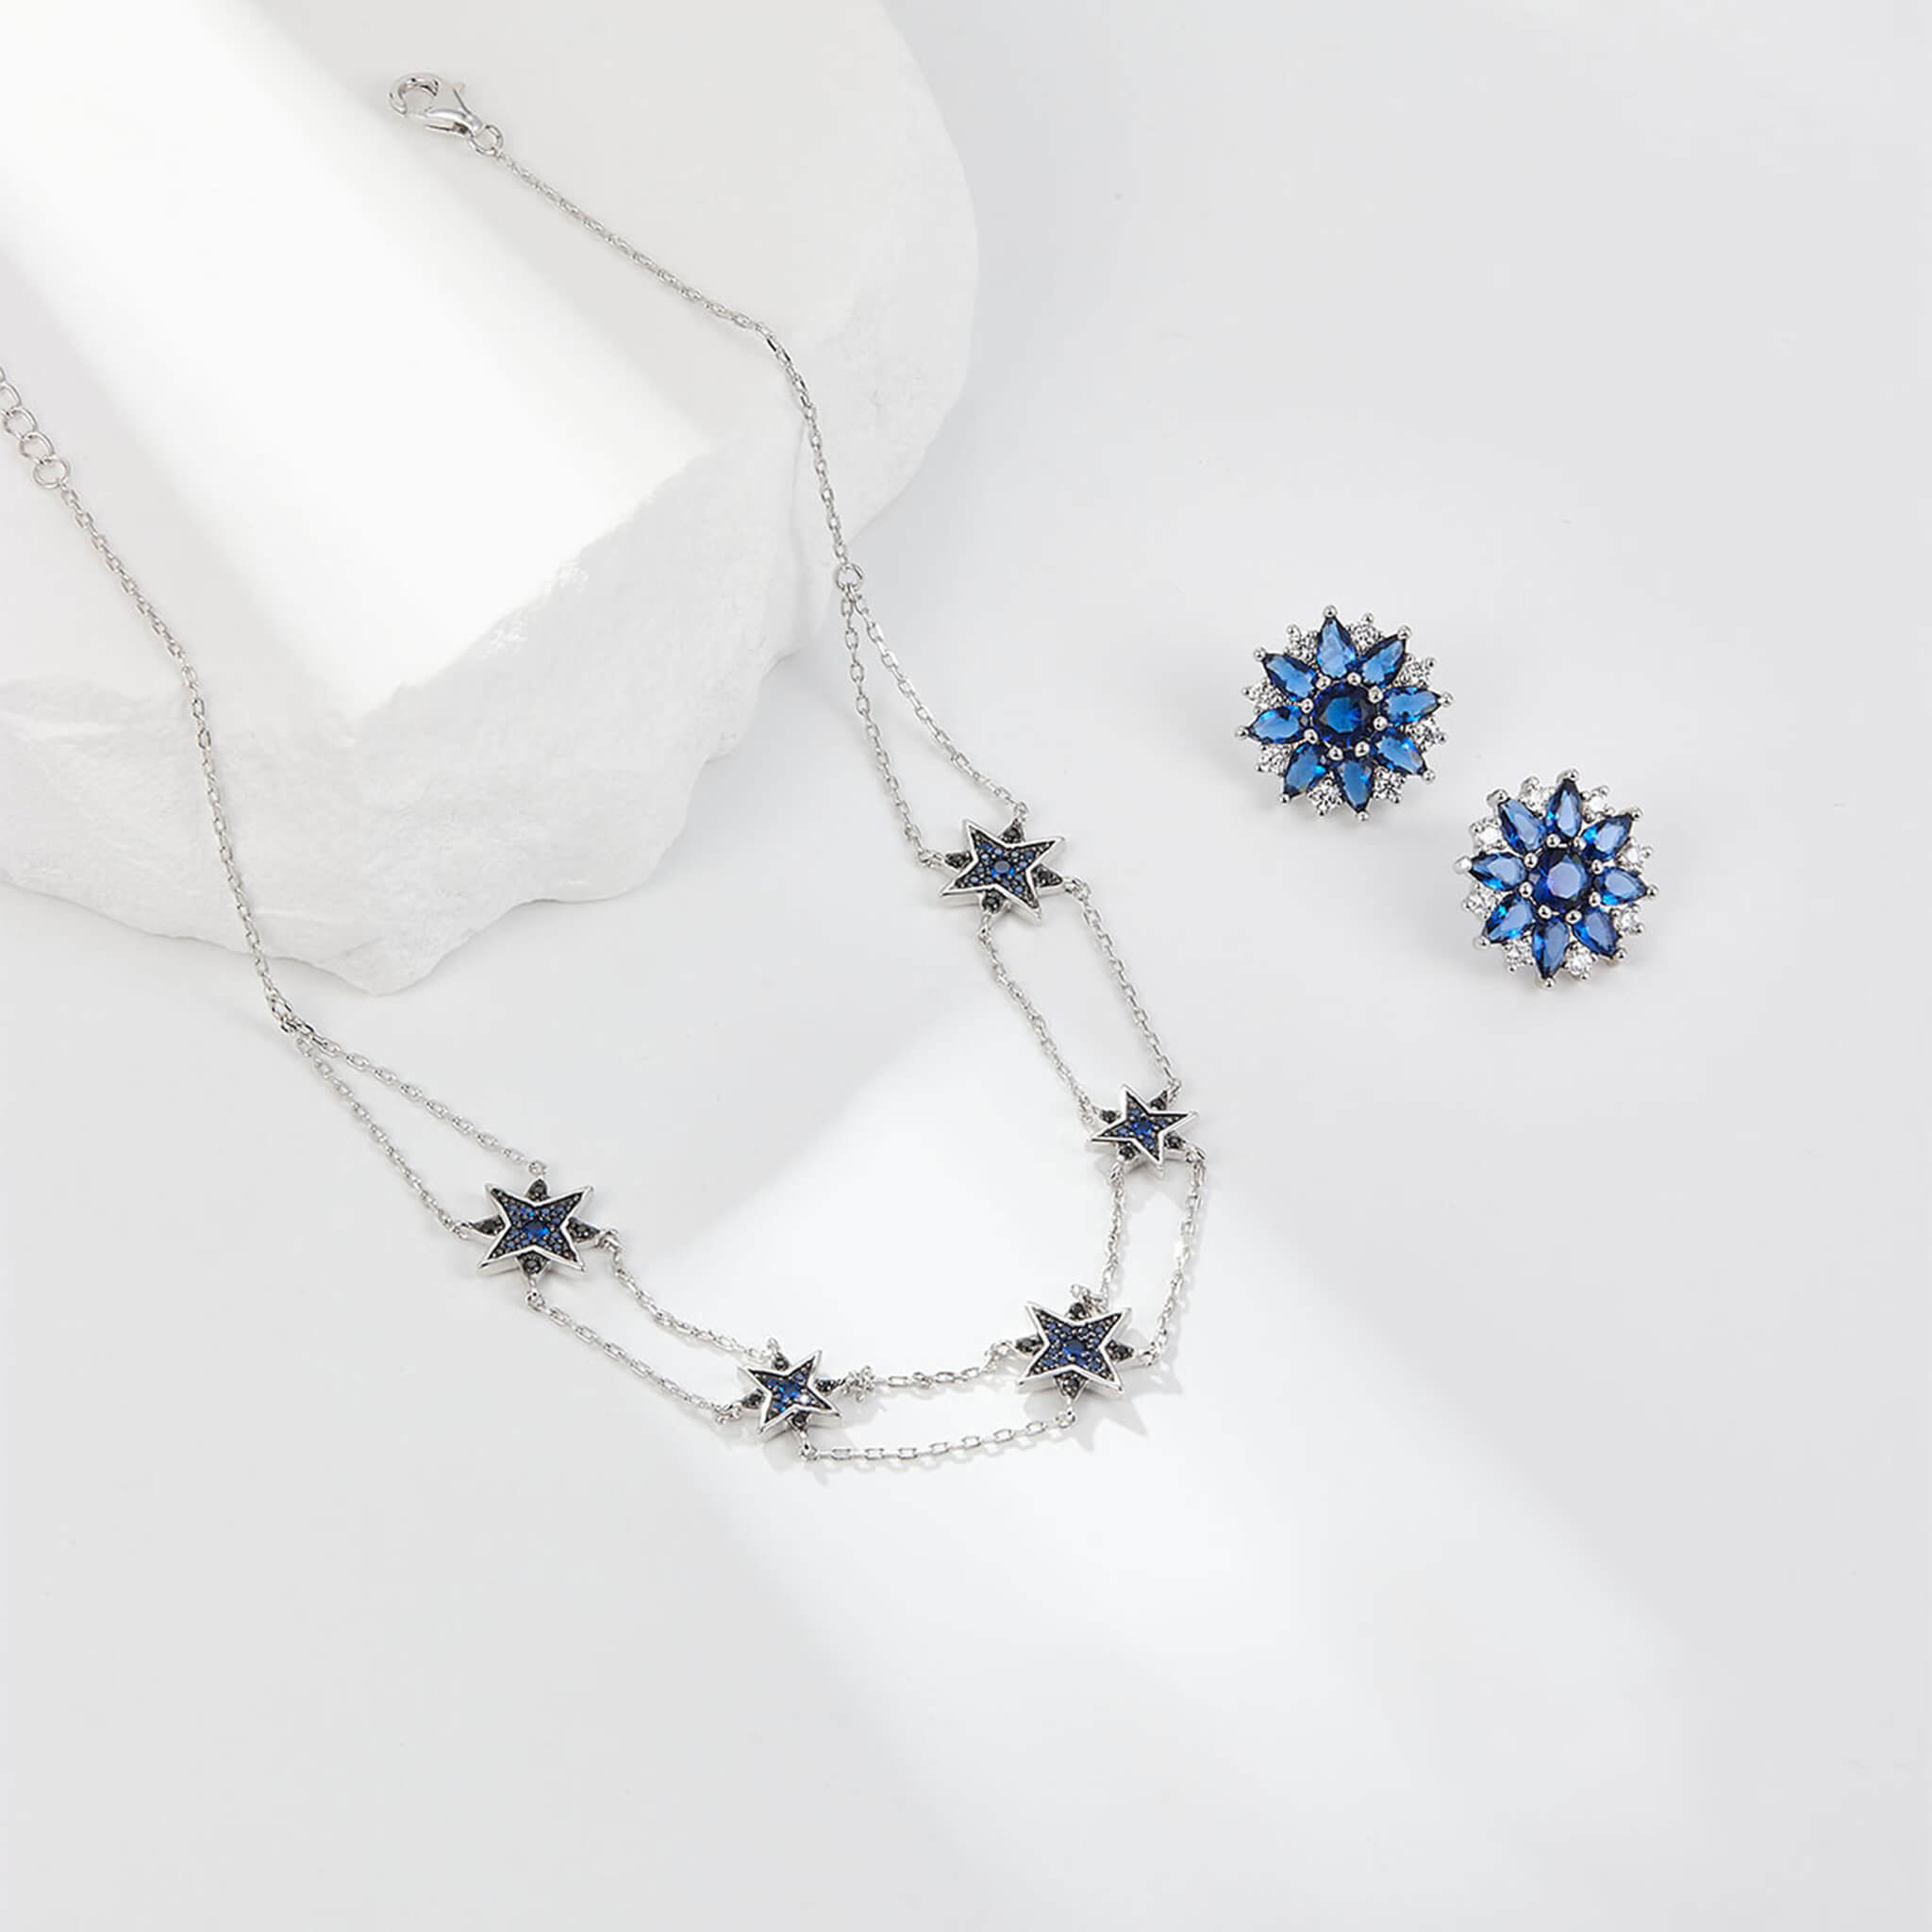 S925 Silver Snowflake Blue Crystal Earrings Necklace Set  UponBasics 2PCS-SET Silver 